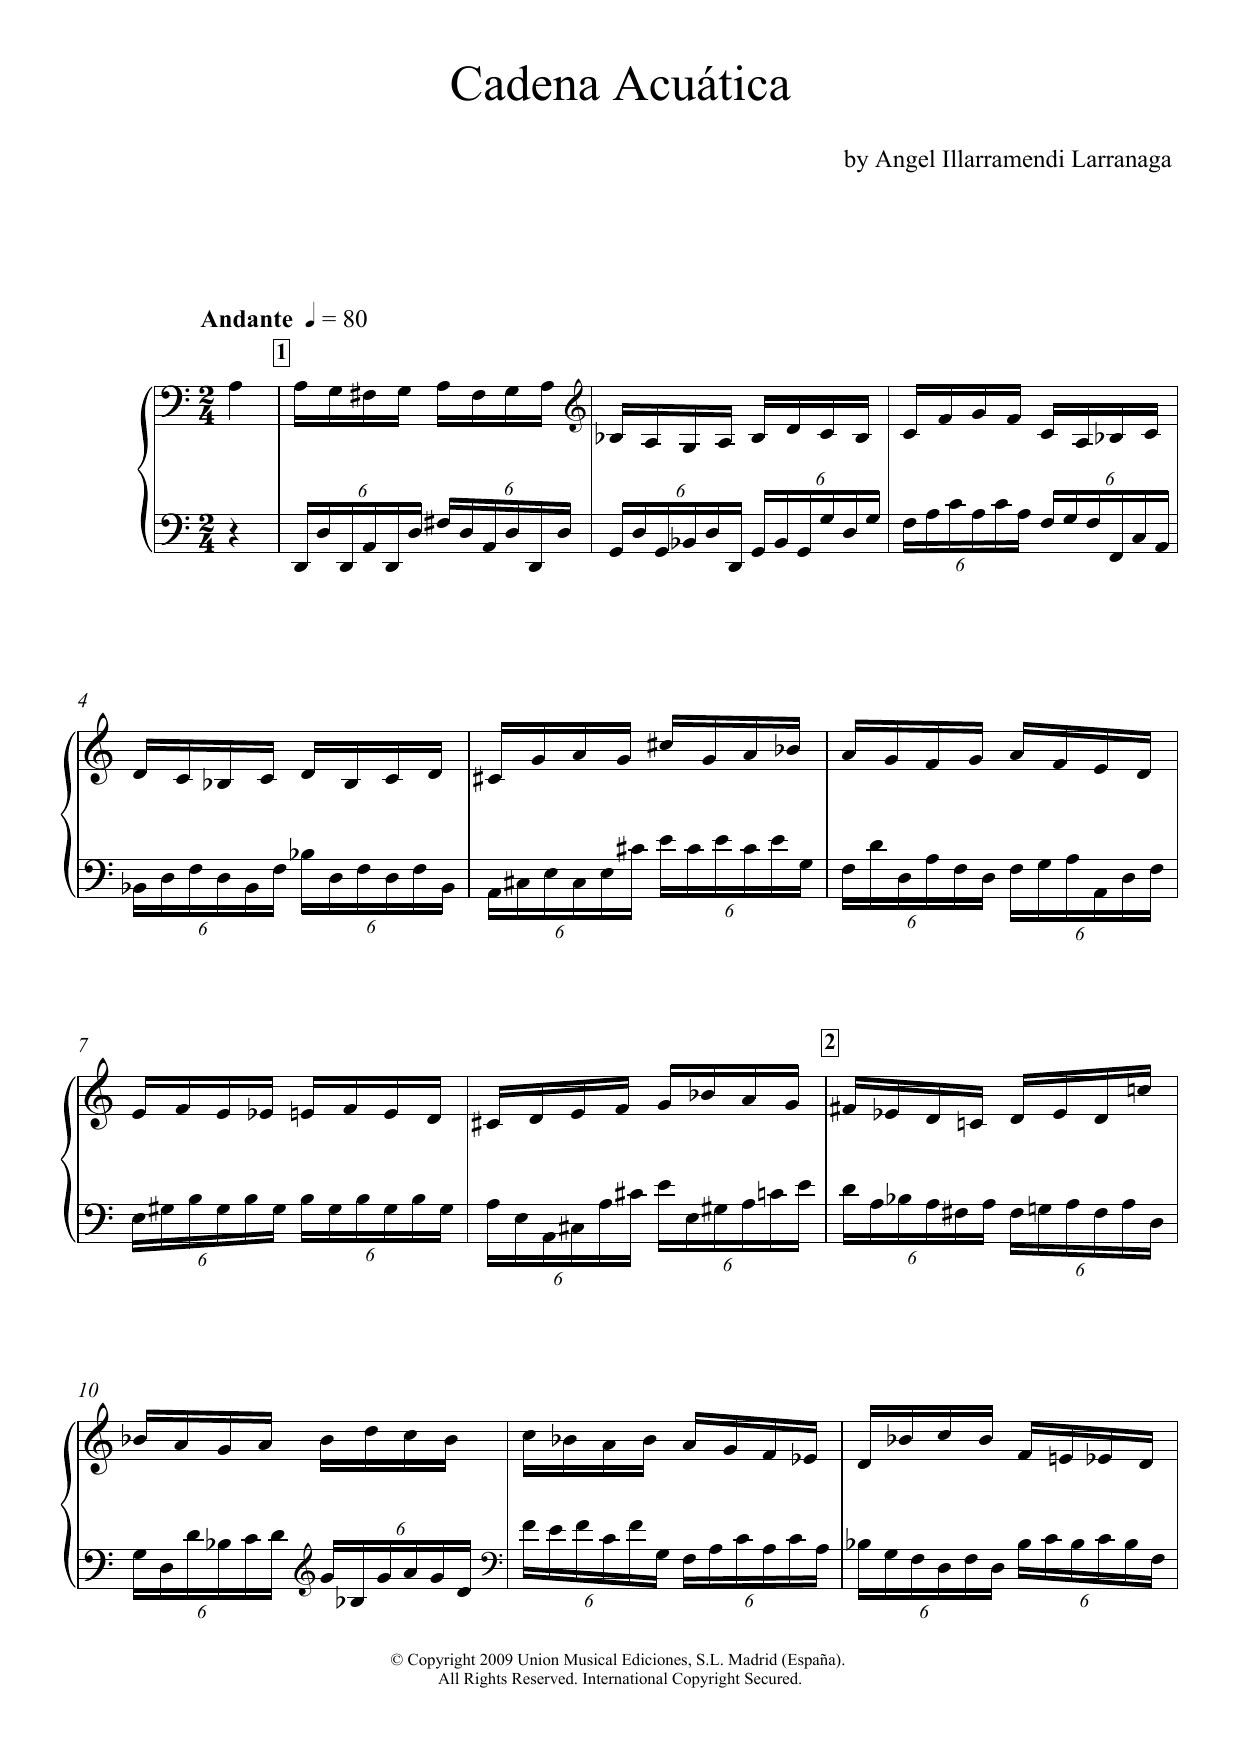 Download Angel Illarramendi Larranaga Cadena Acuática Sheet Music and learn how to play Piano PDF digital score in minutes